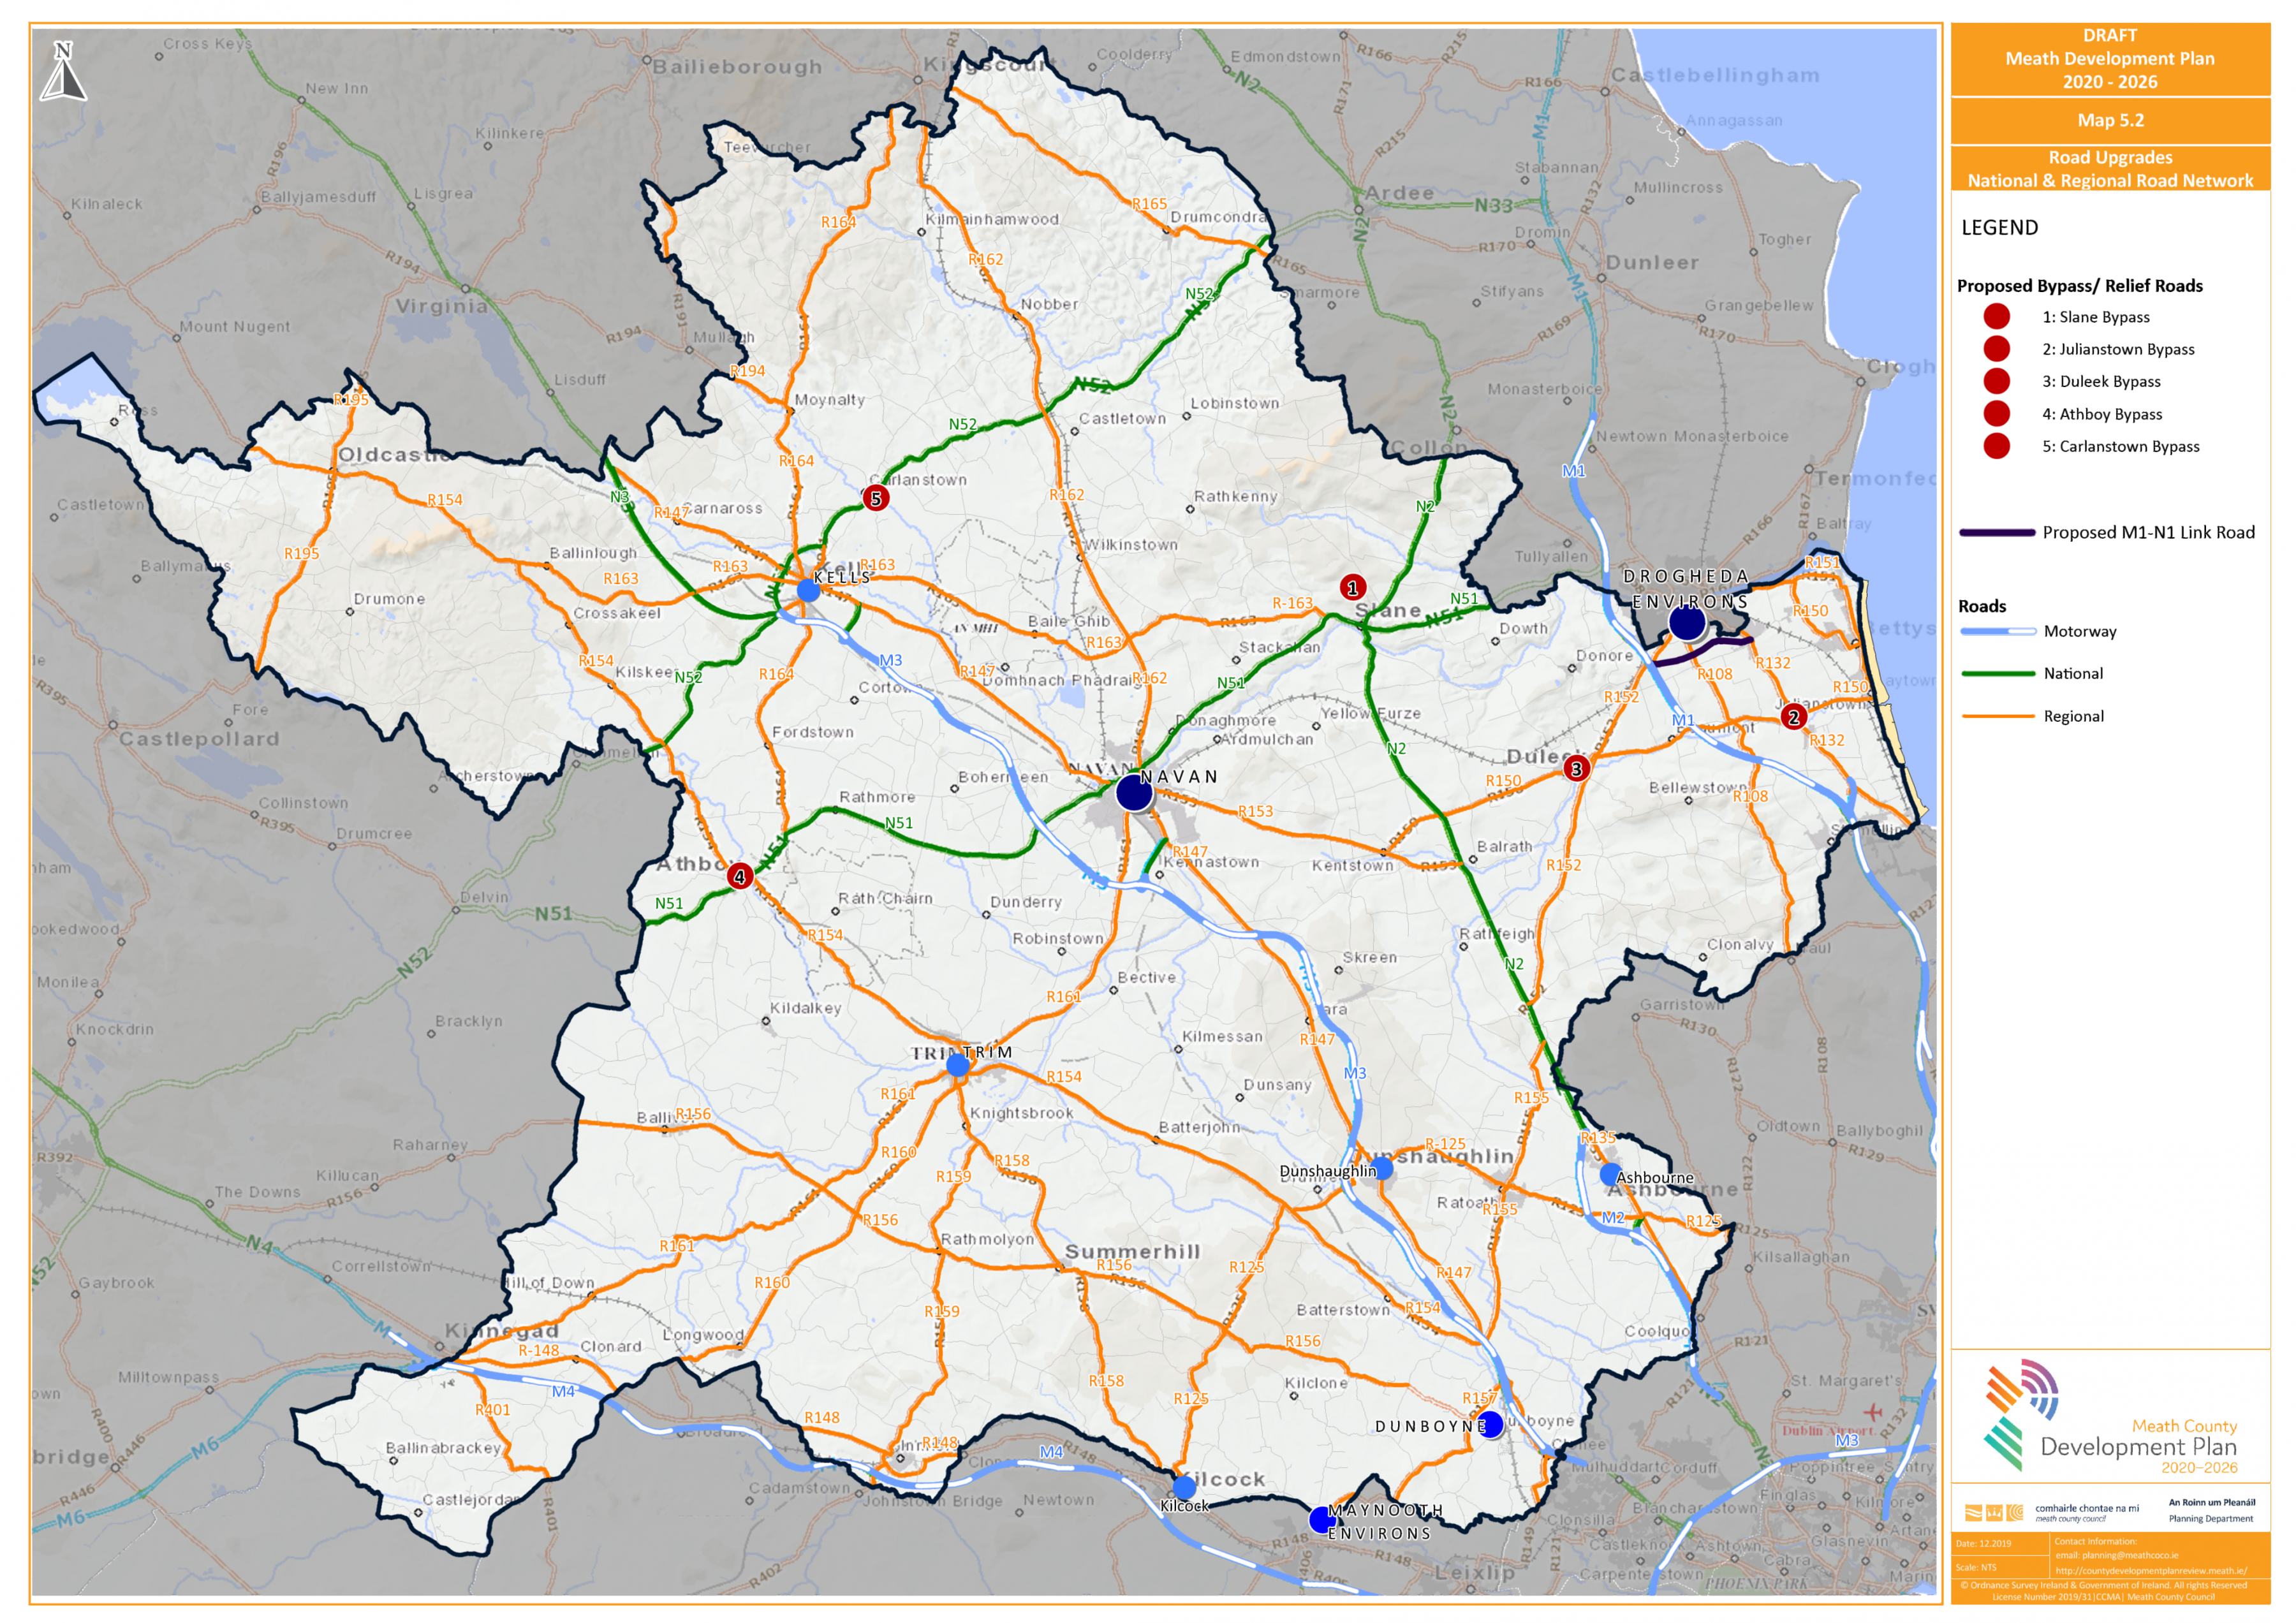 Map 5.2 Road Upgrades Regional   National 